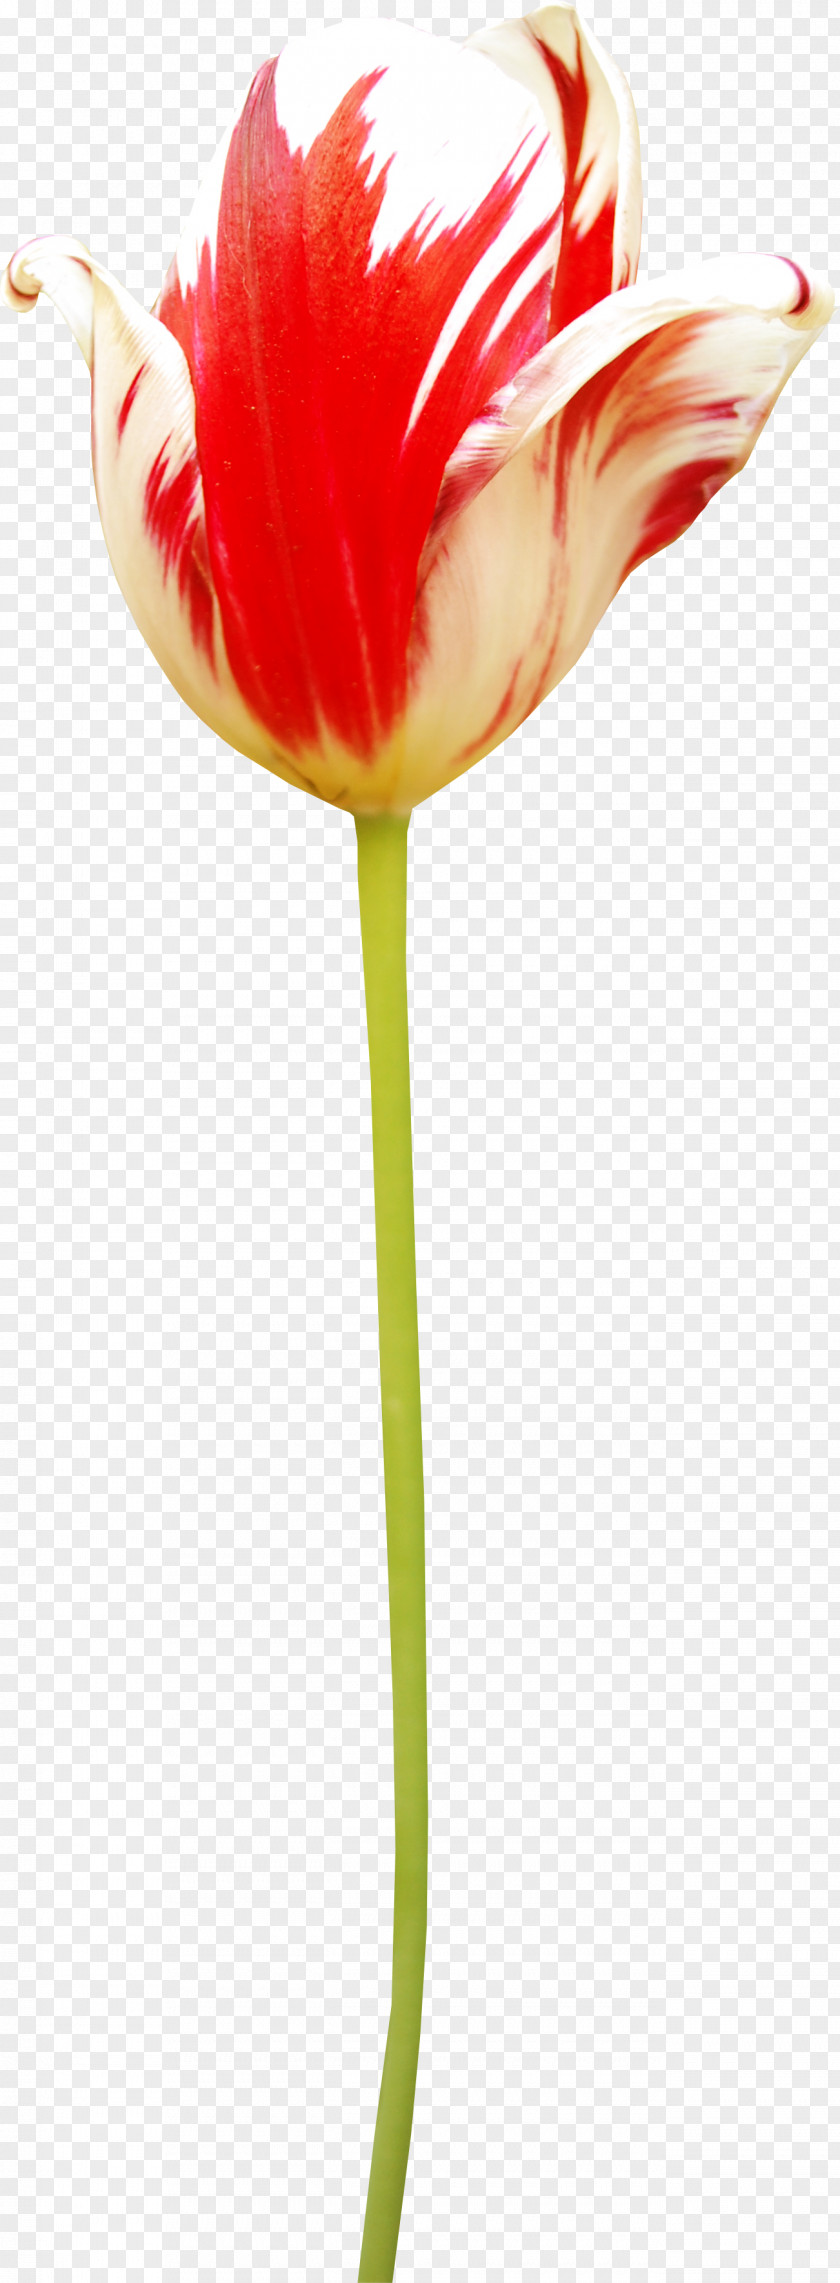 Fruit Basket Tulip Amaryllis Jersey Lily Cut Flowers Plant Stem PNG